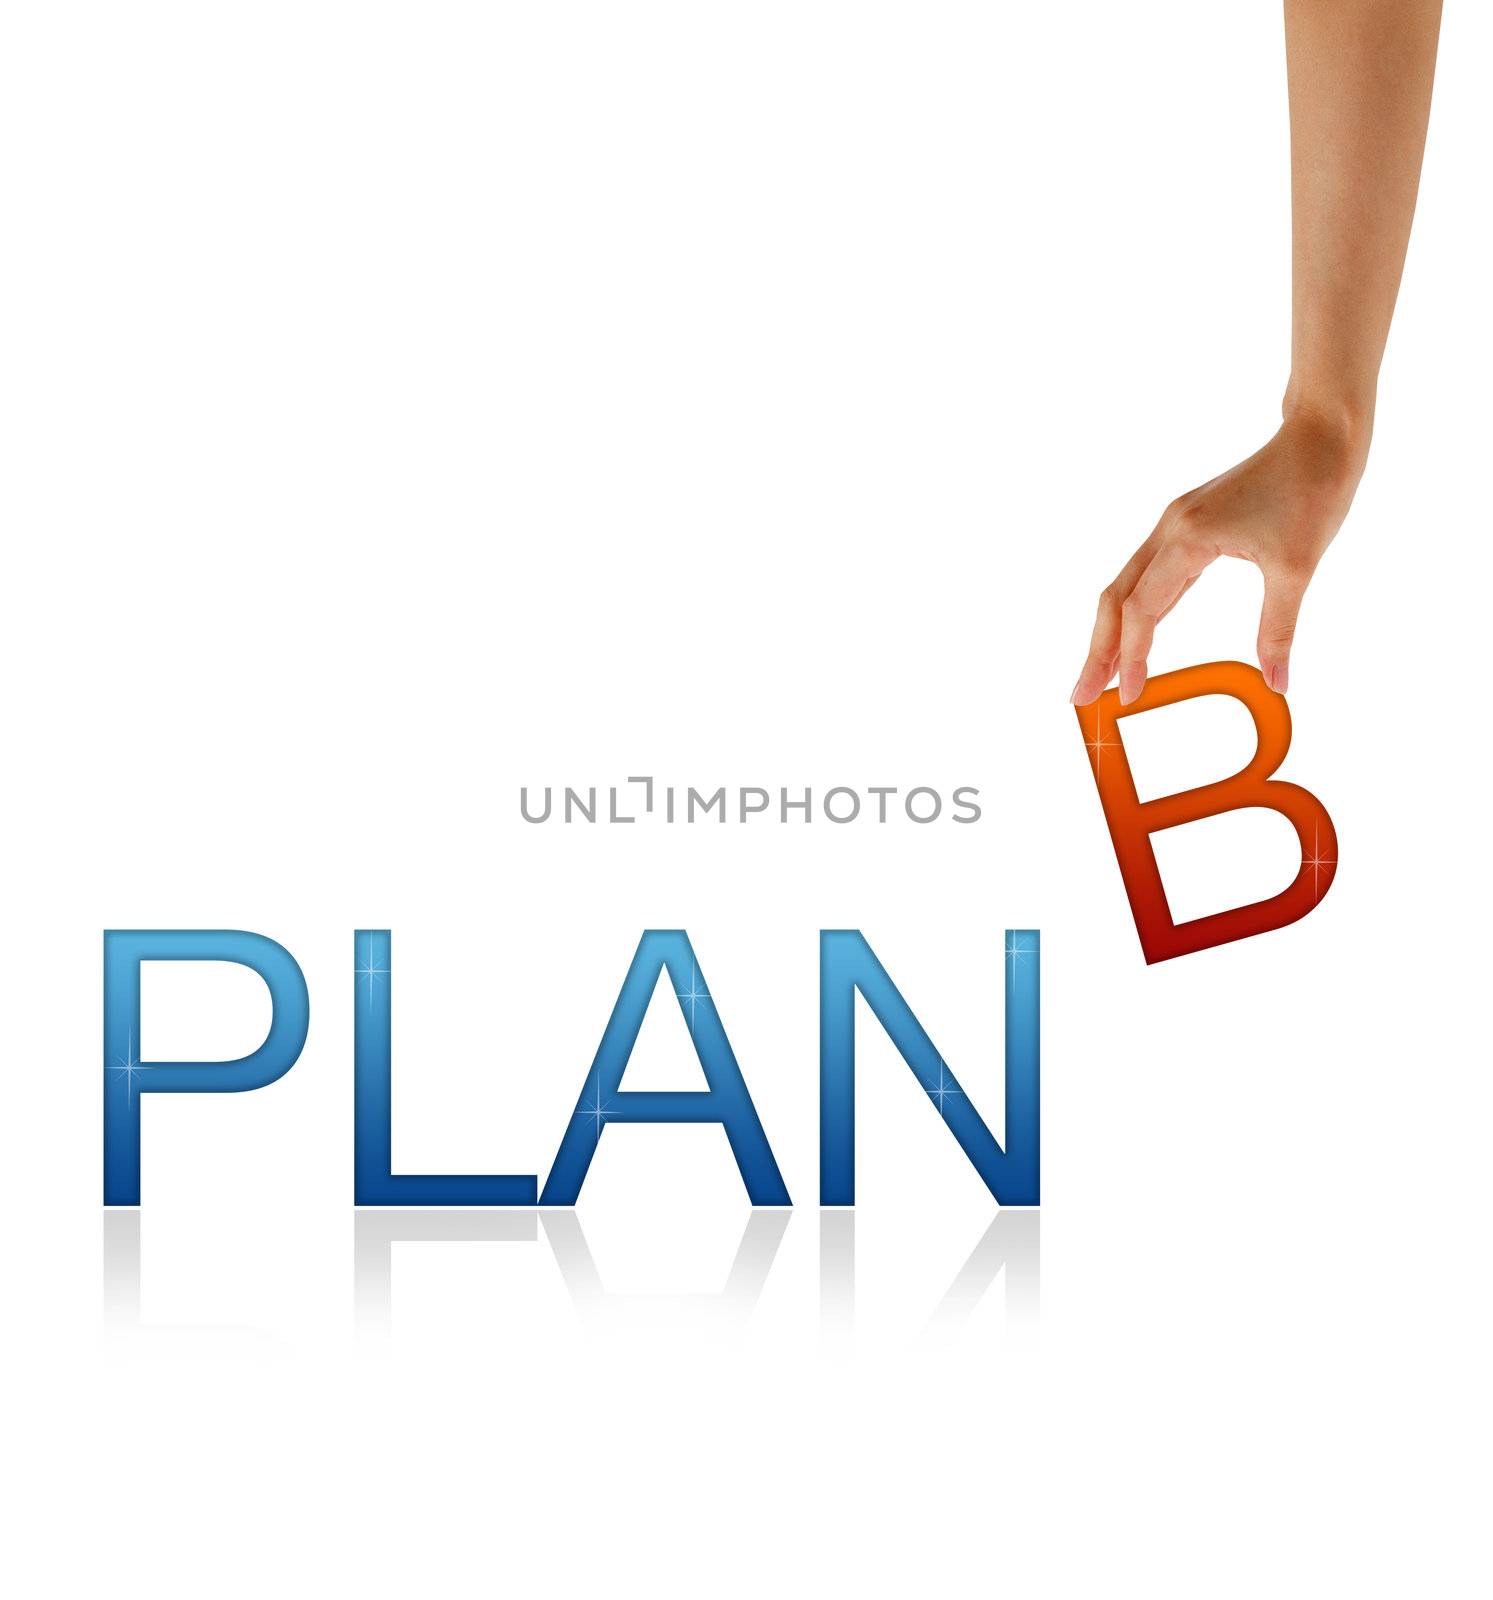 Plan B - Hand by kbuntu